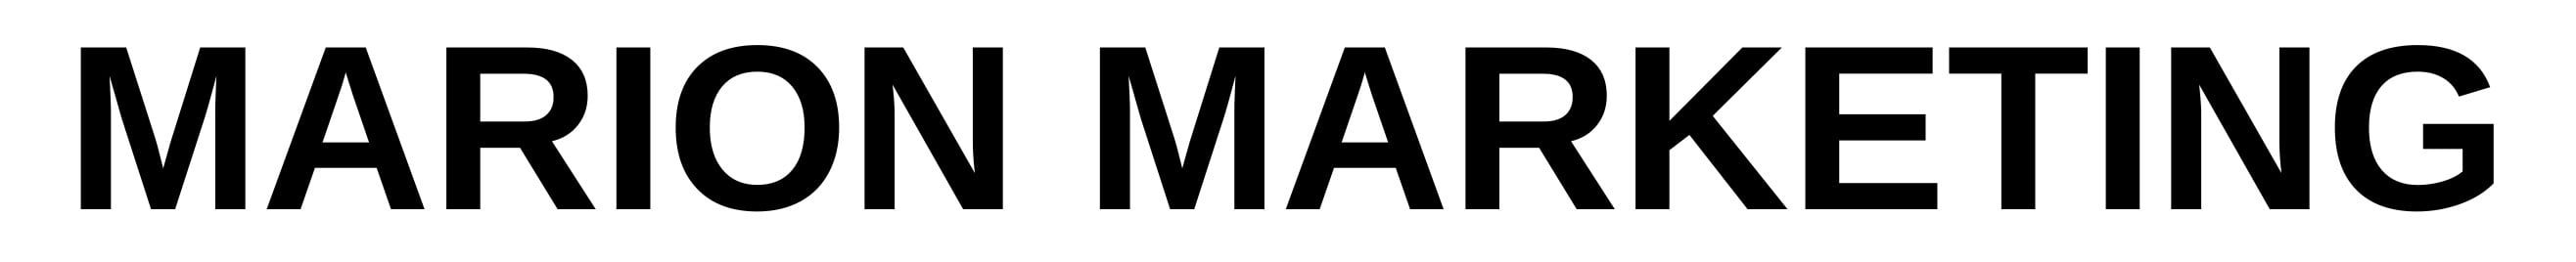 Marion Marketing Logo